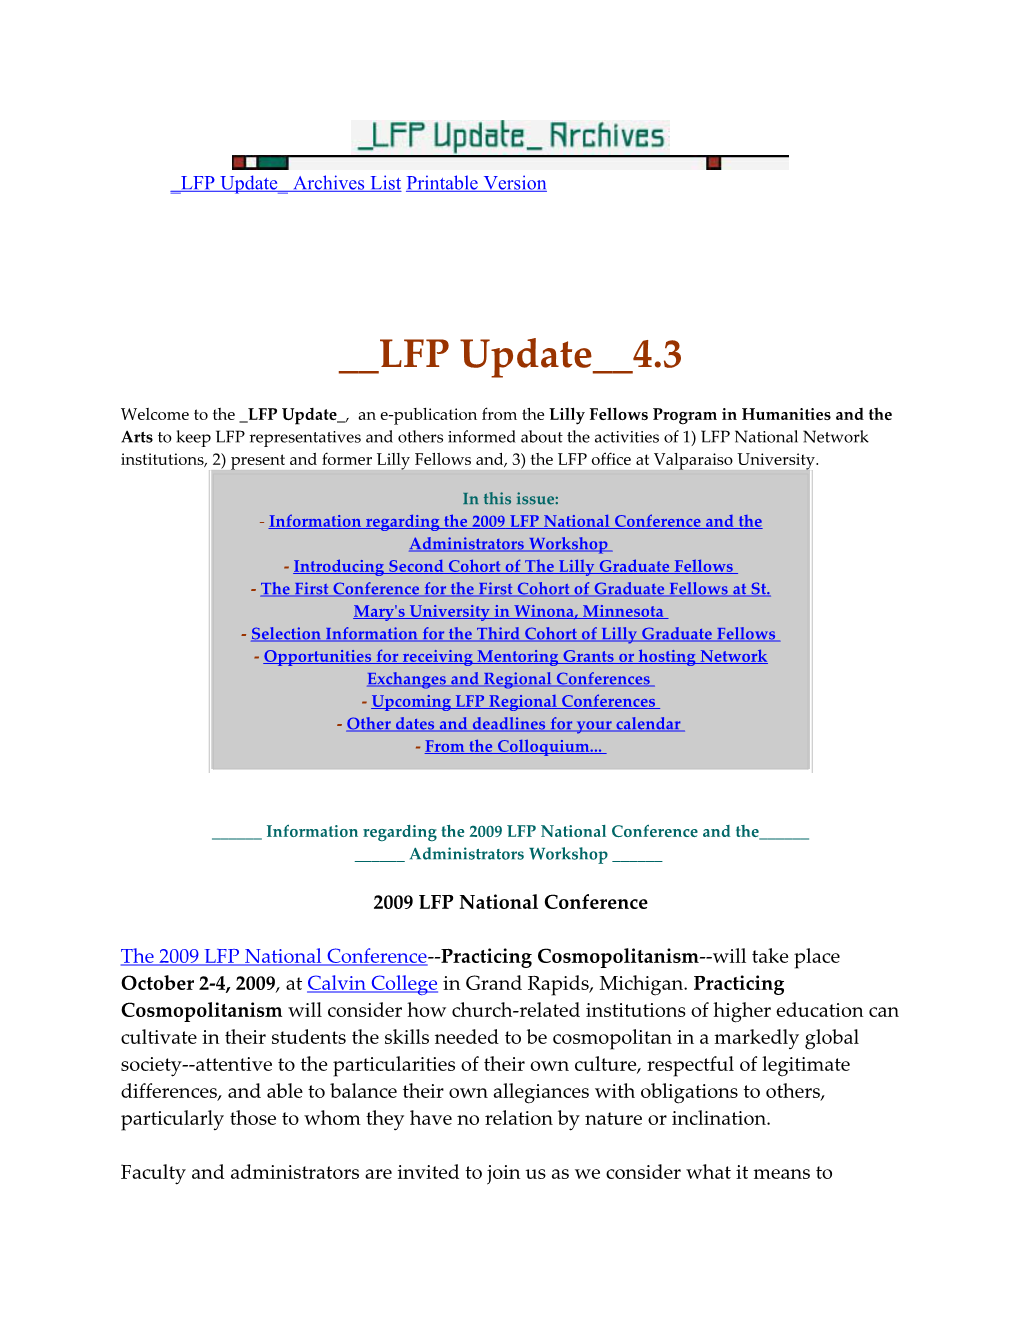 LFP Update Archives List Printable Version